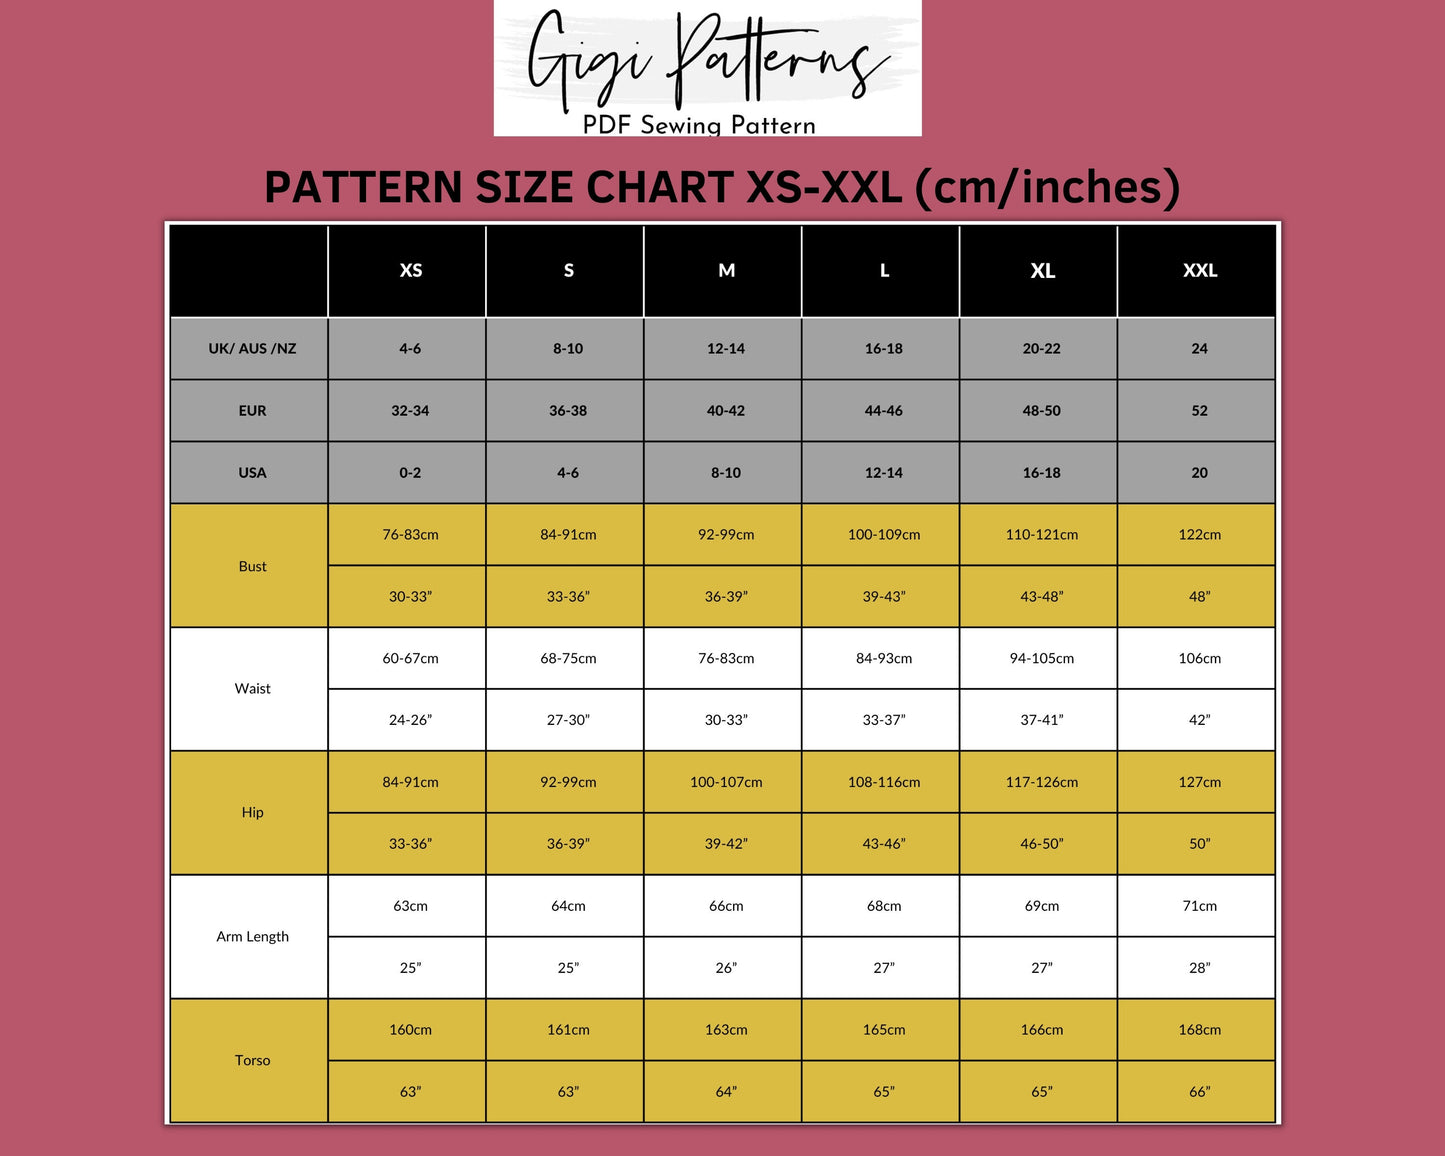 Women's Basic Leotard Sloper Pattern Block // Fashion designer, swimwear basic sloper, sloper pattern pdf, leotard pattern pdf, pole dance